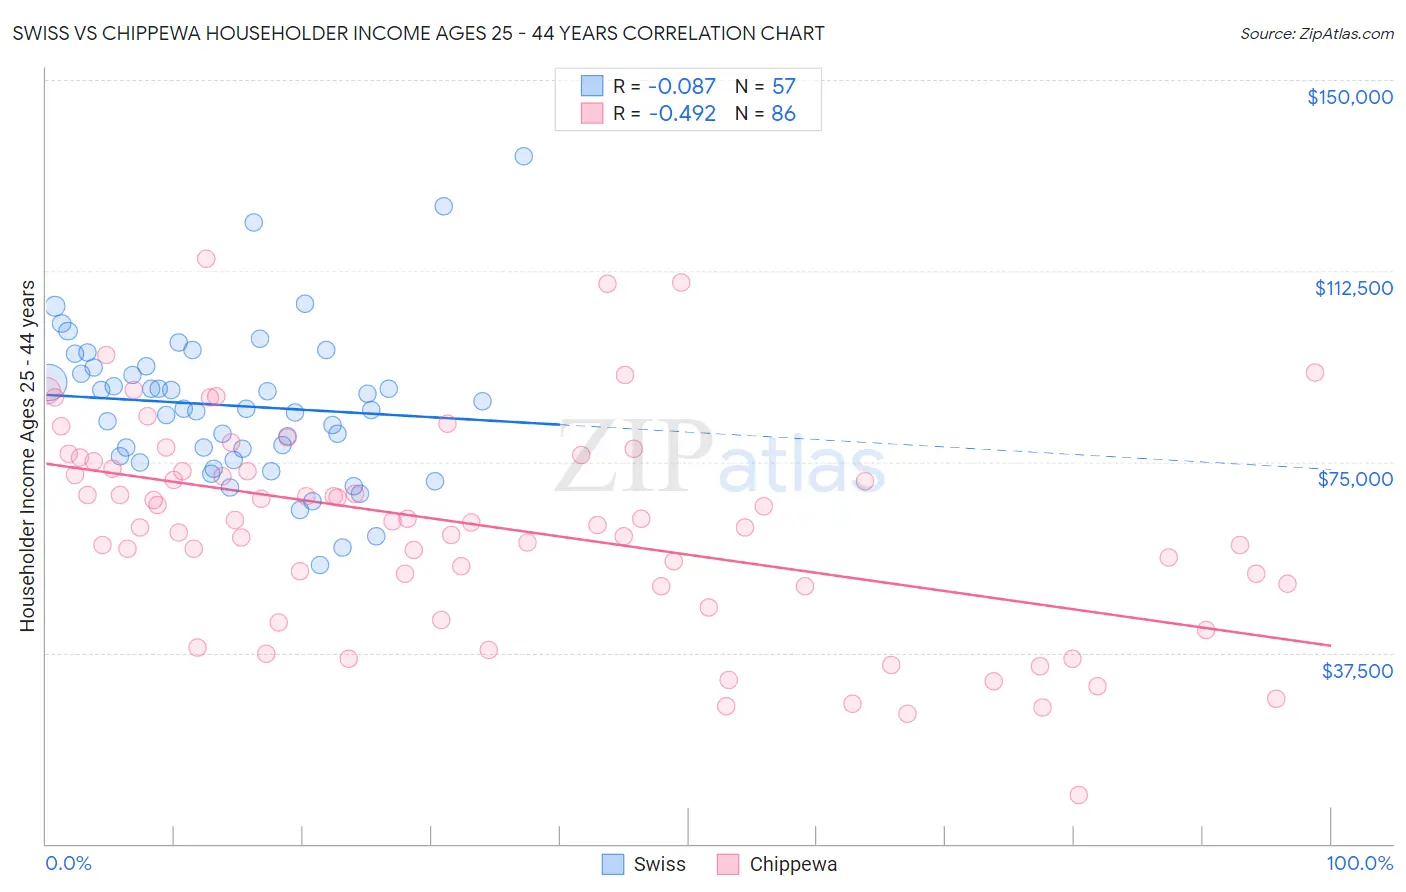 Swiss vs Chippewa Householder Income Ages 25 - 44 years